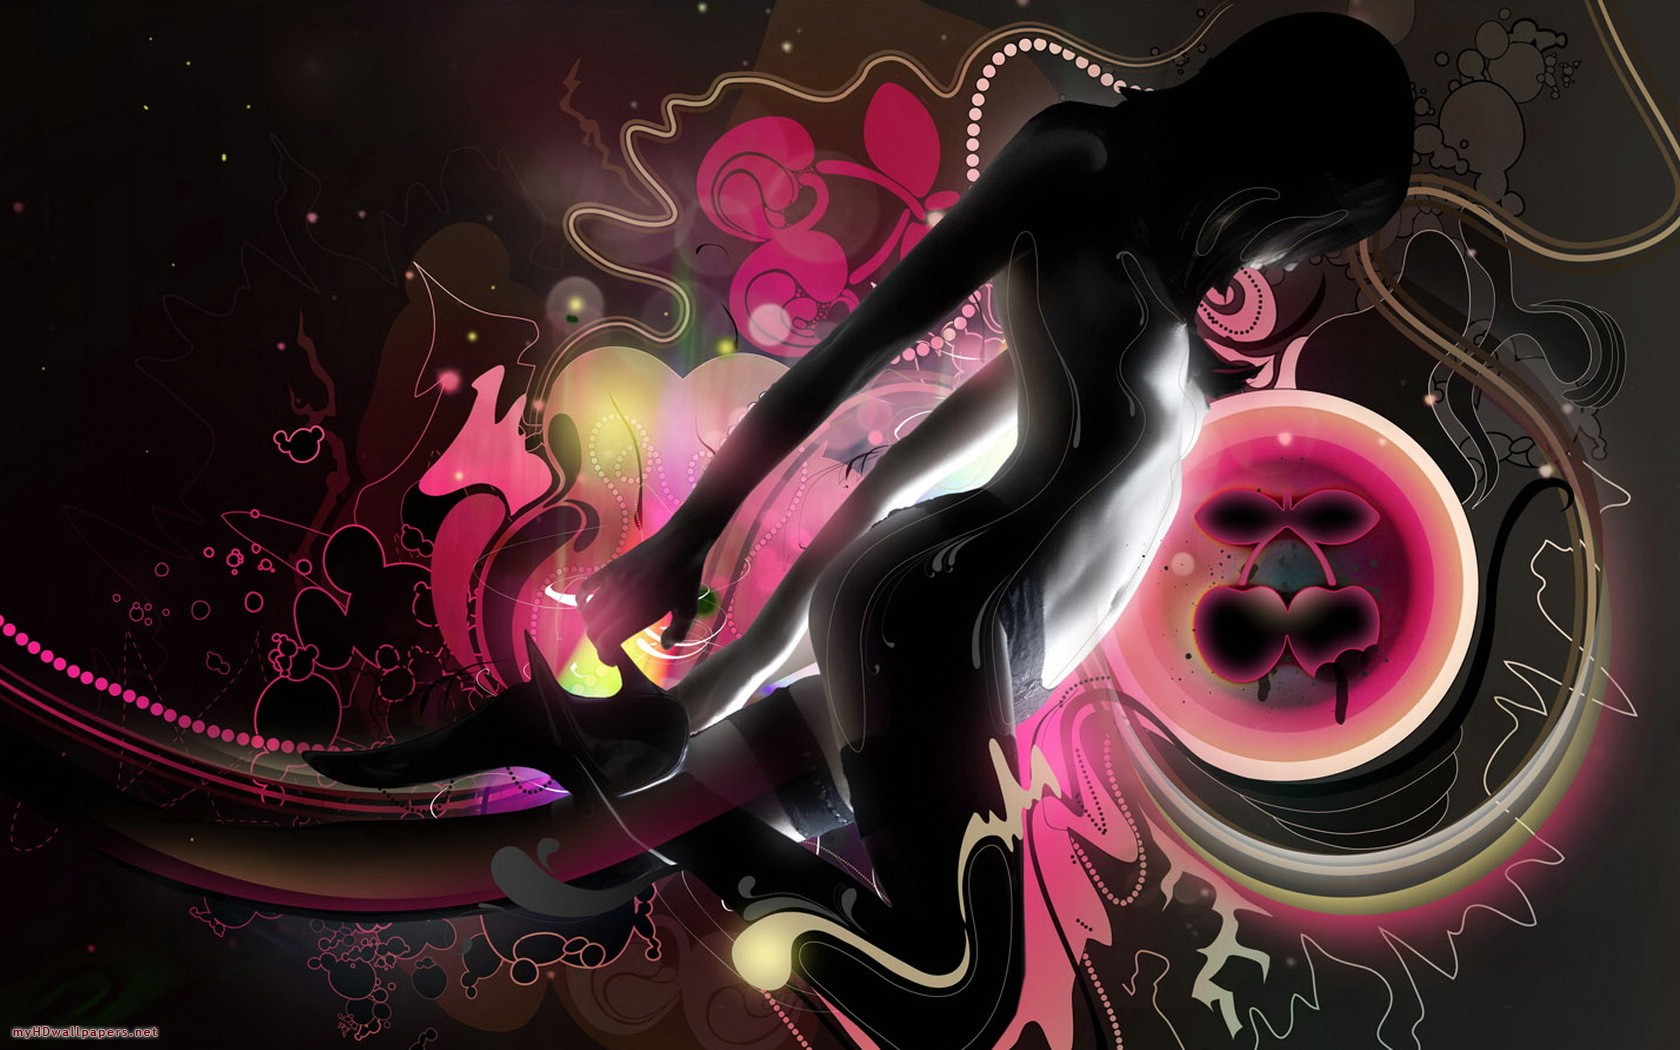 Dancing Girl Graphics - Free Desktop Wallpaper, HD Wallpapers ...